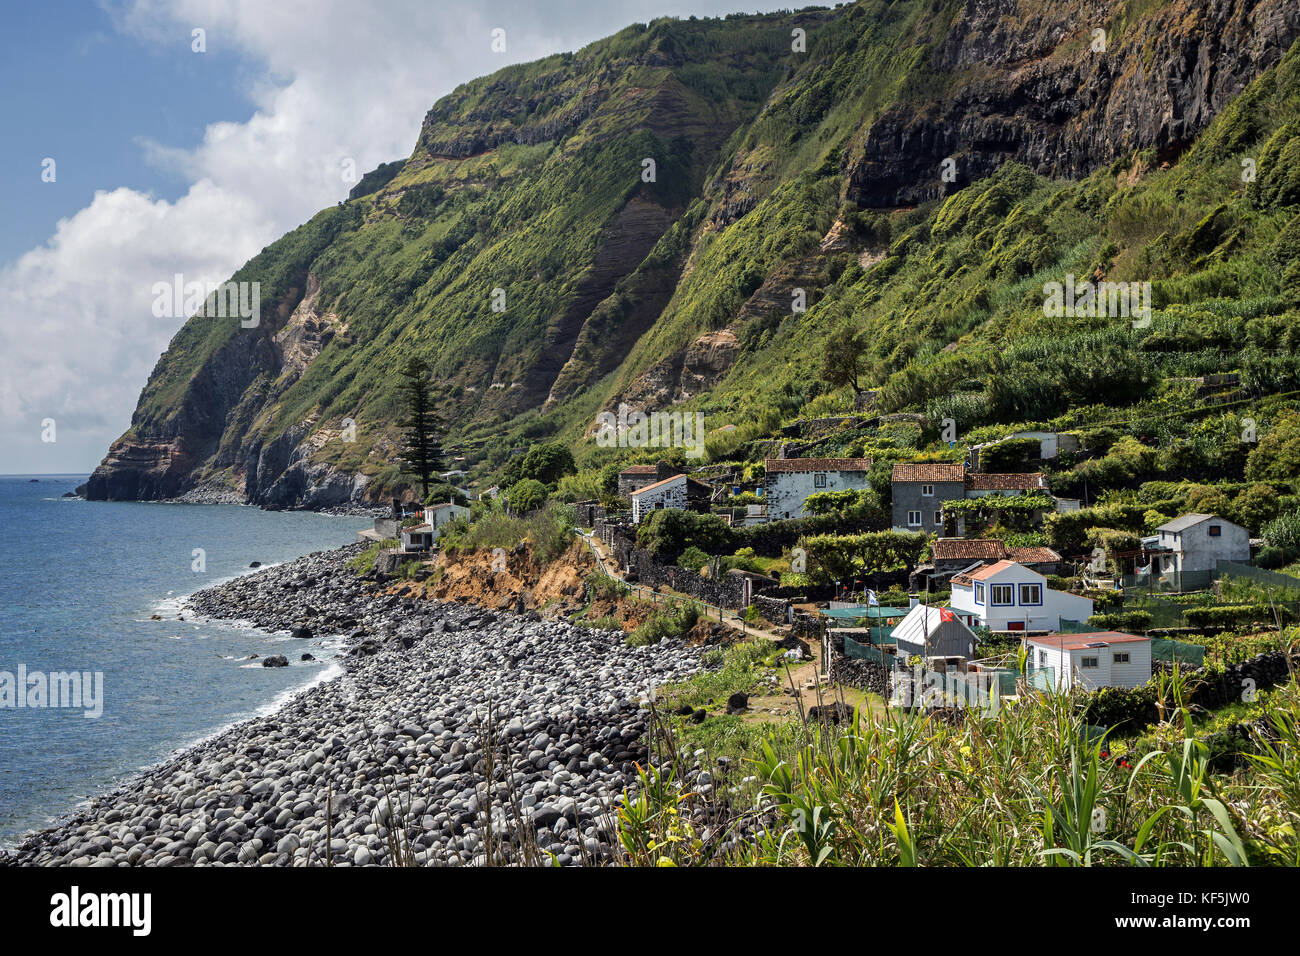 View of cliffs and settlement Rocha da Relva, southwest coast, island of Sao Miguel, Azores, Portugal Stock Photo